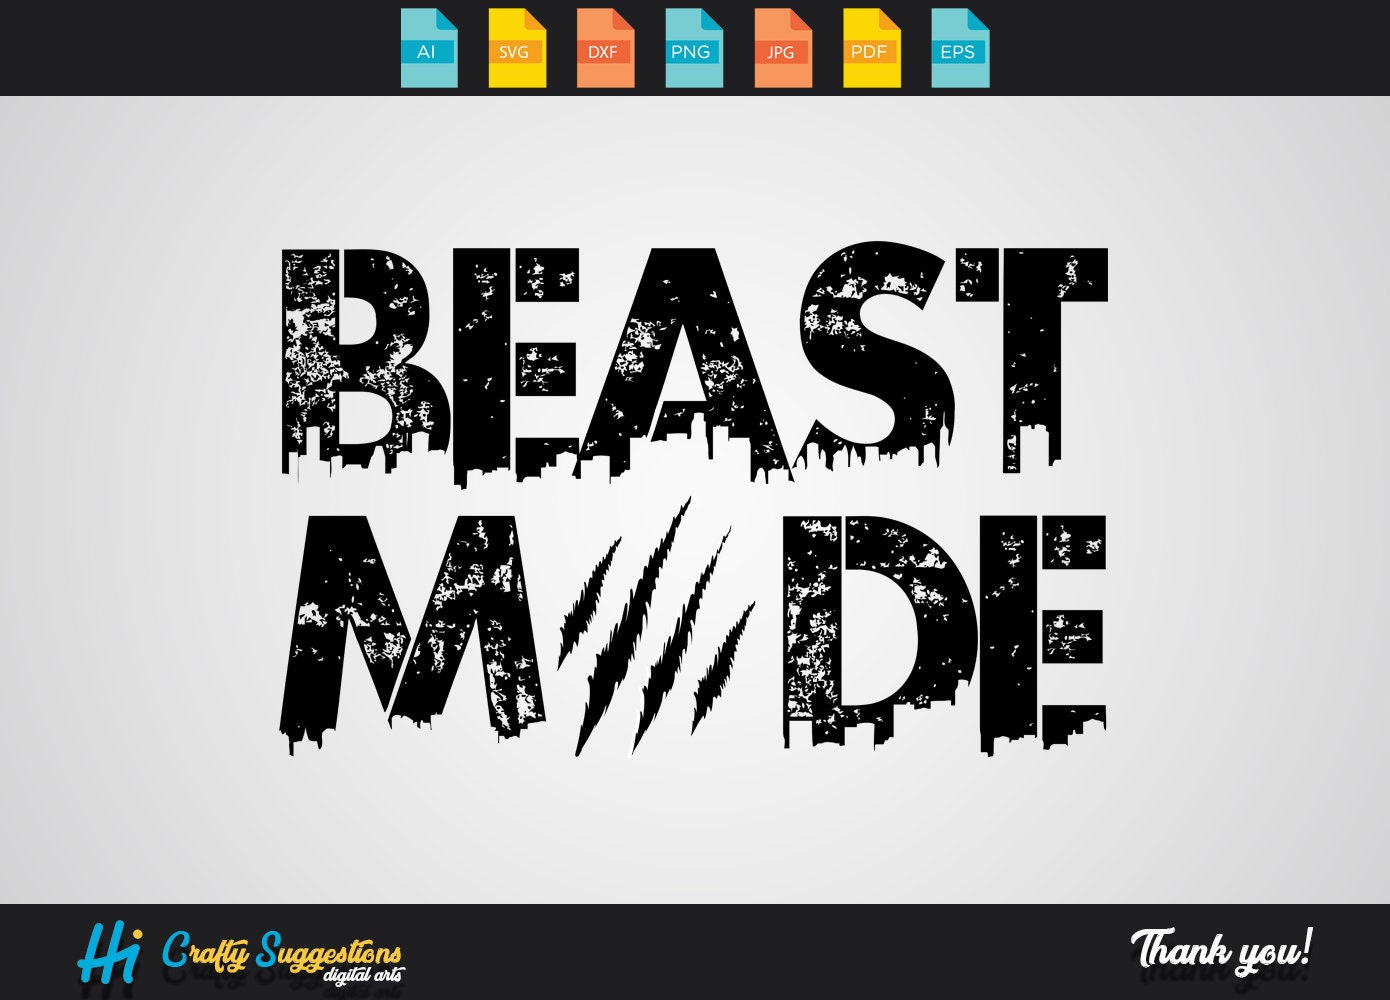 future beast mode 2 zip download free